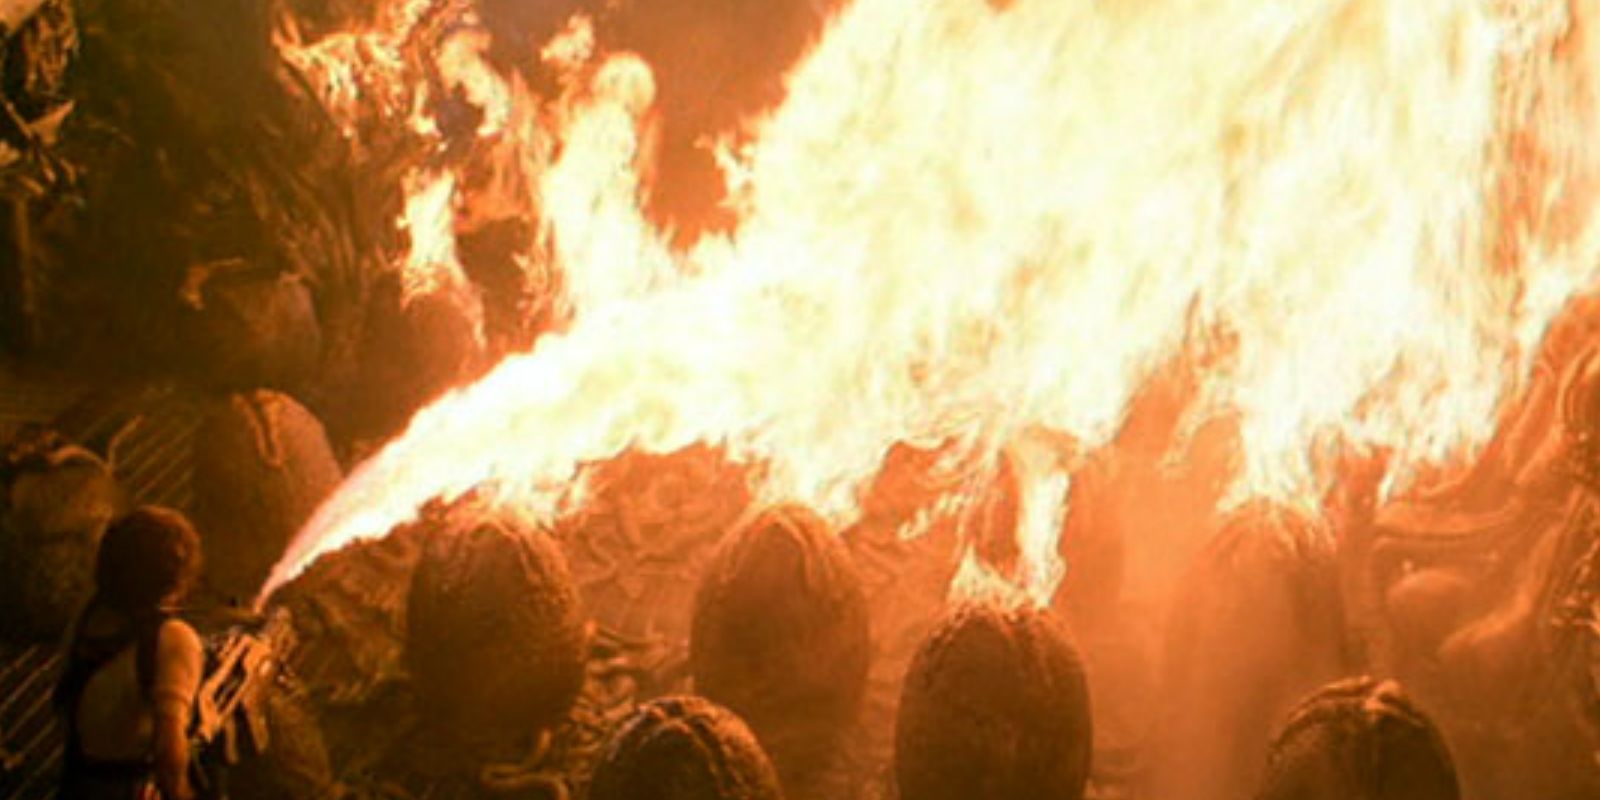 Ripley burning the xenomorph eggs in Aliens